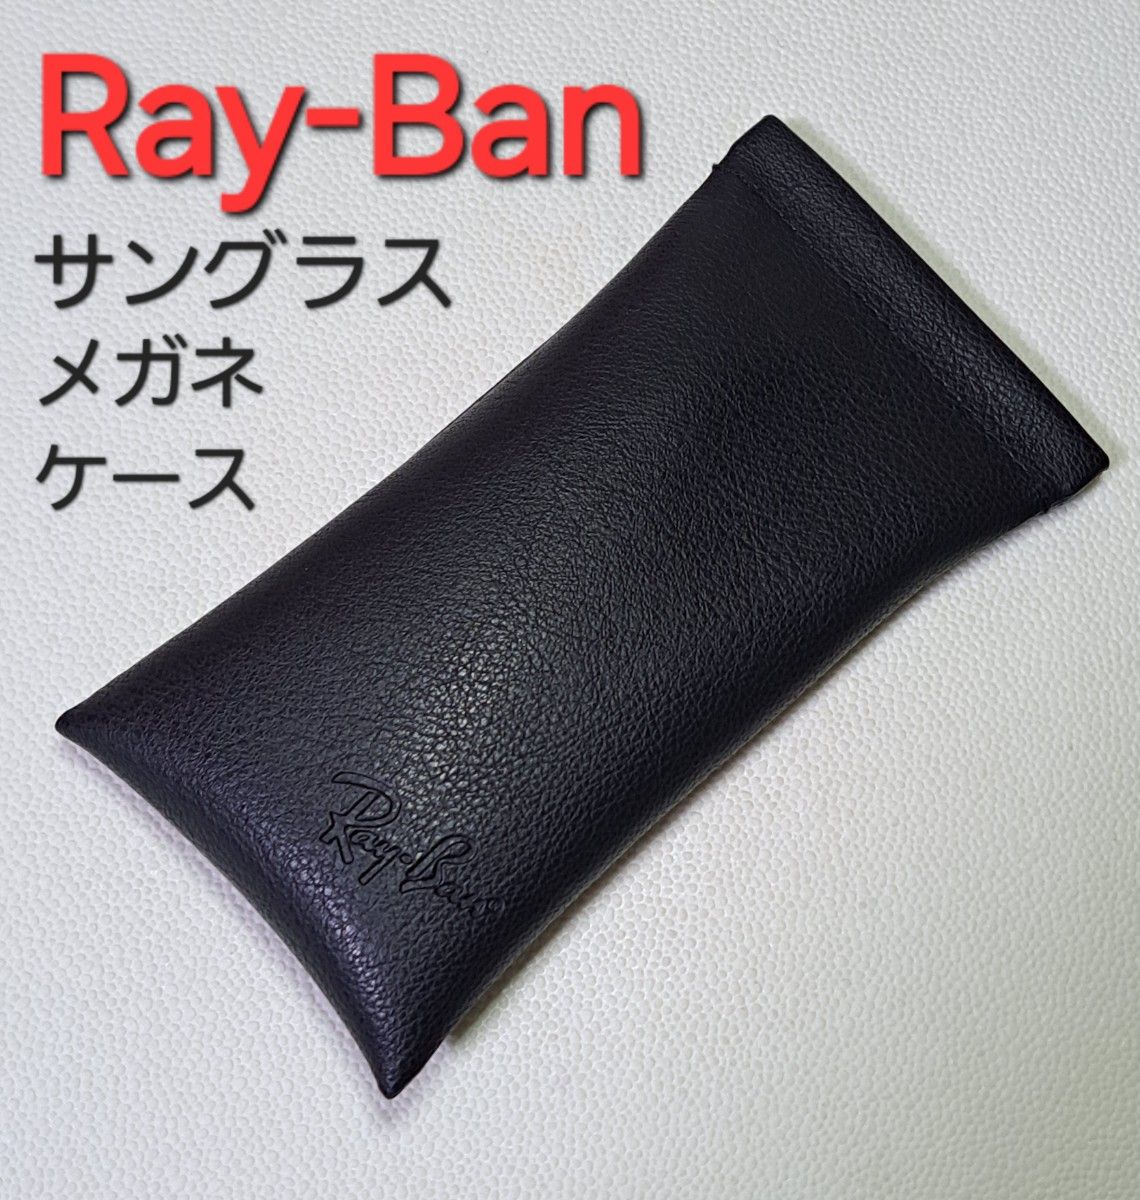 Ray-Ban レイバン サングラス 眼鏡 ケース レザー調 本革調